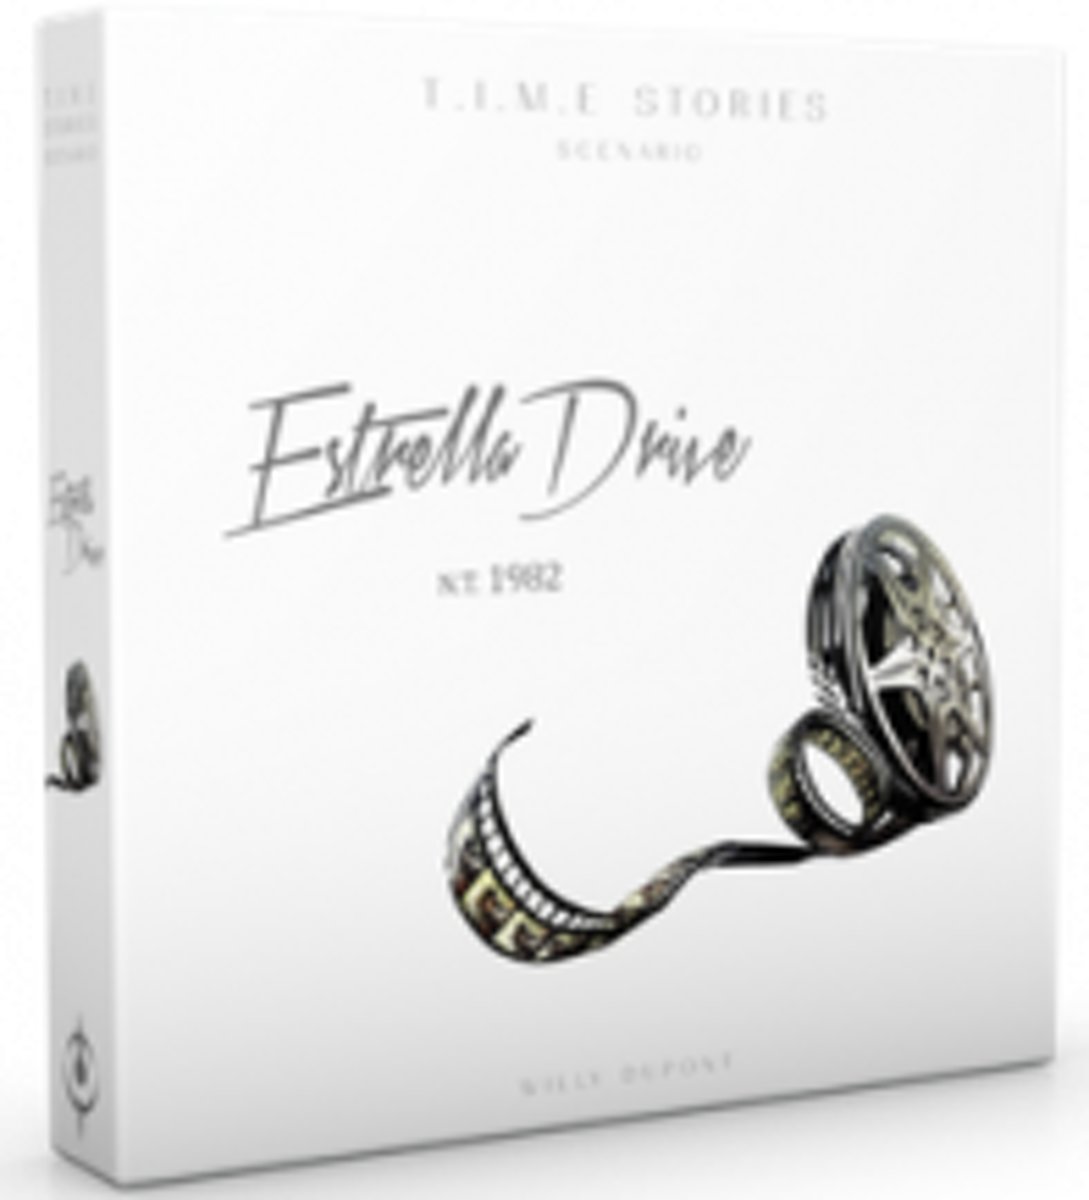 Time Stories Estrella Drive